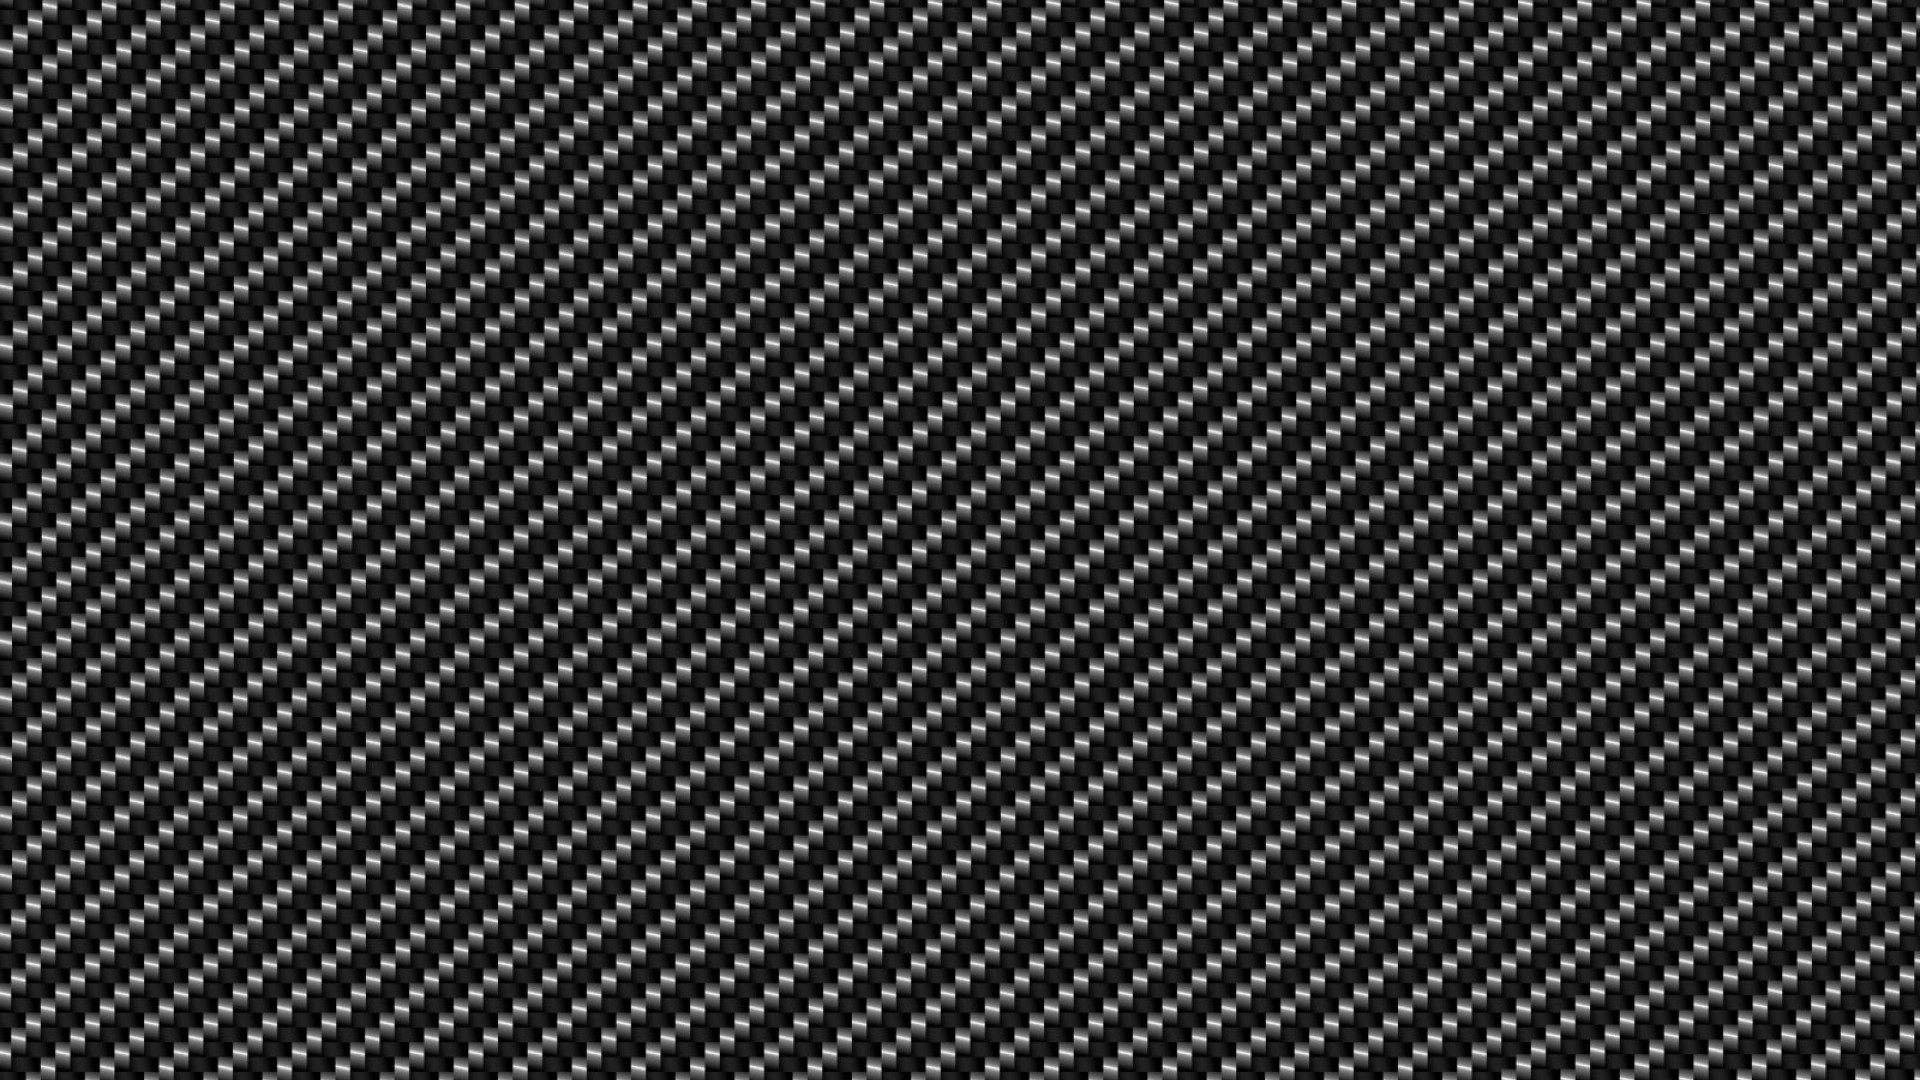 Carbon fiber backgrounds wallpaper HD free download.